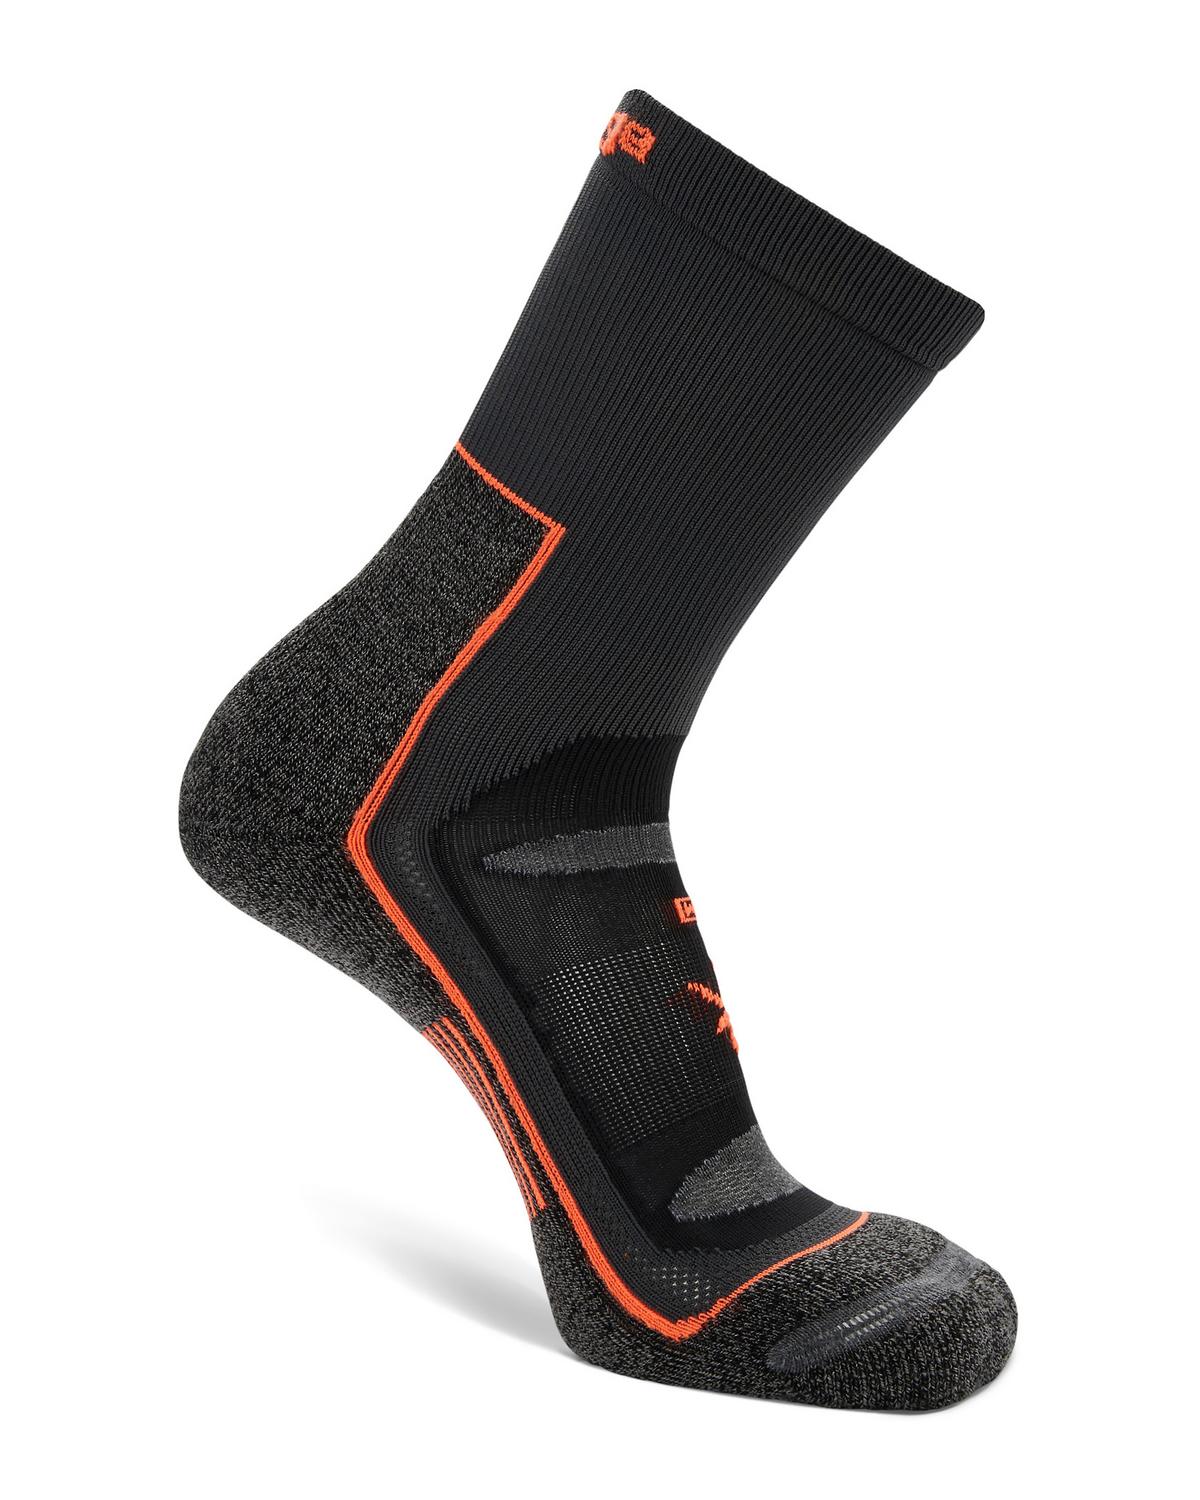 Balega Blister Resist Crew Socks -  Grey/Orange